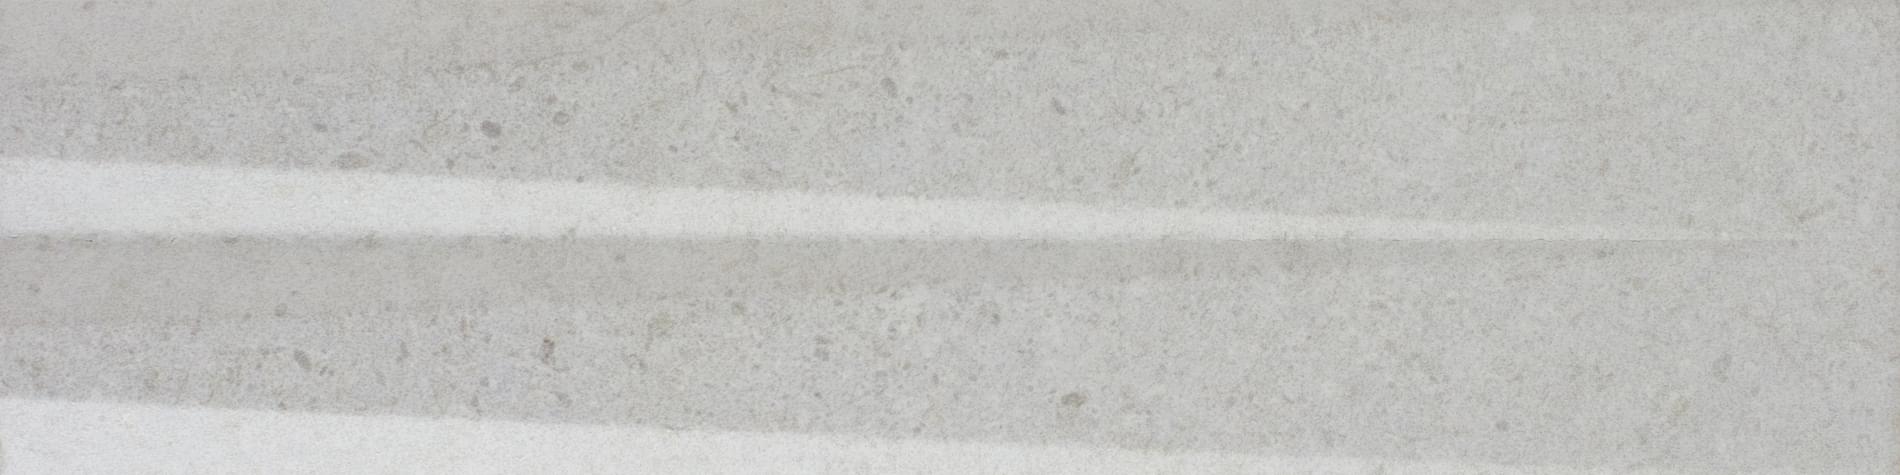 Wow Stripes Transition White Stone 7.5x30